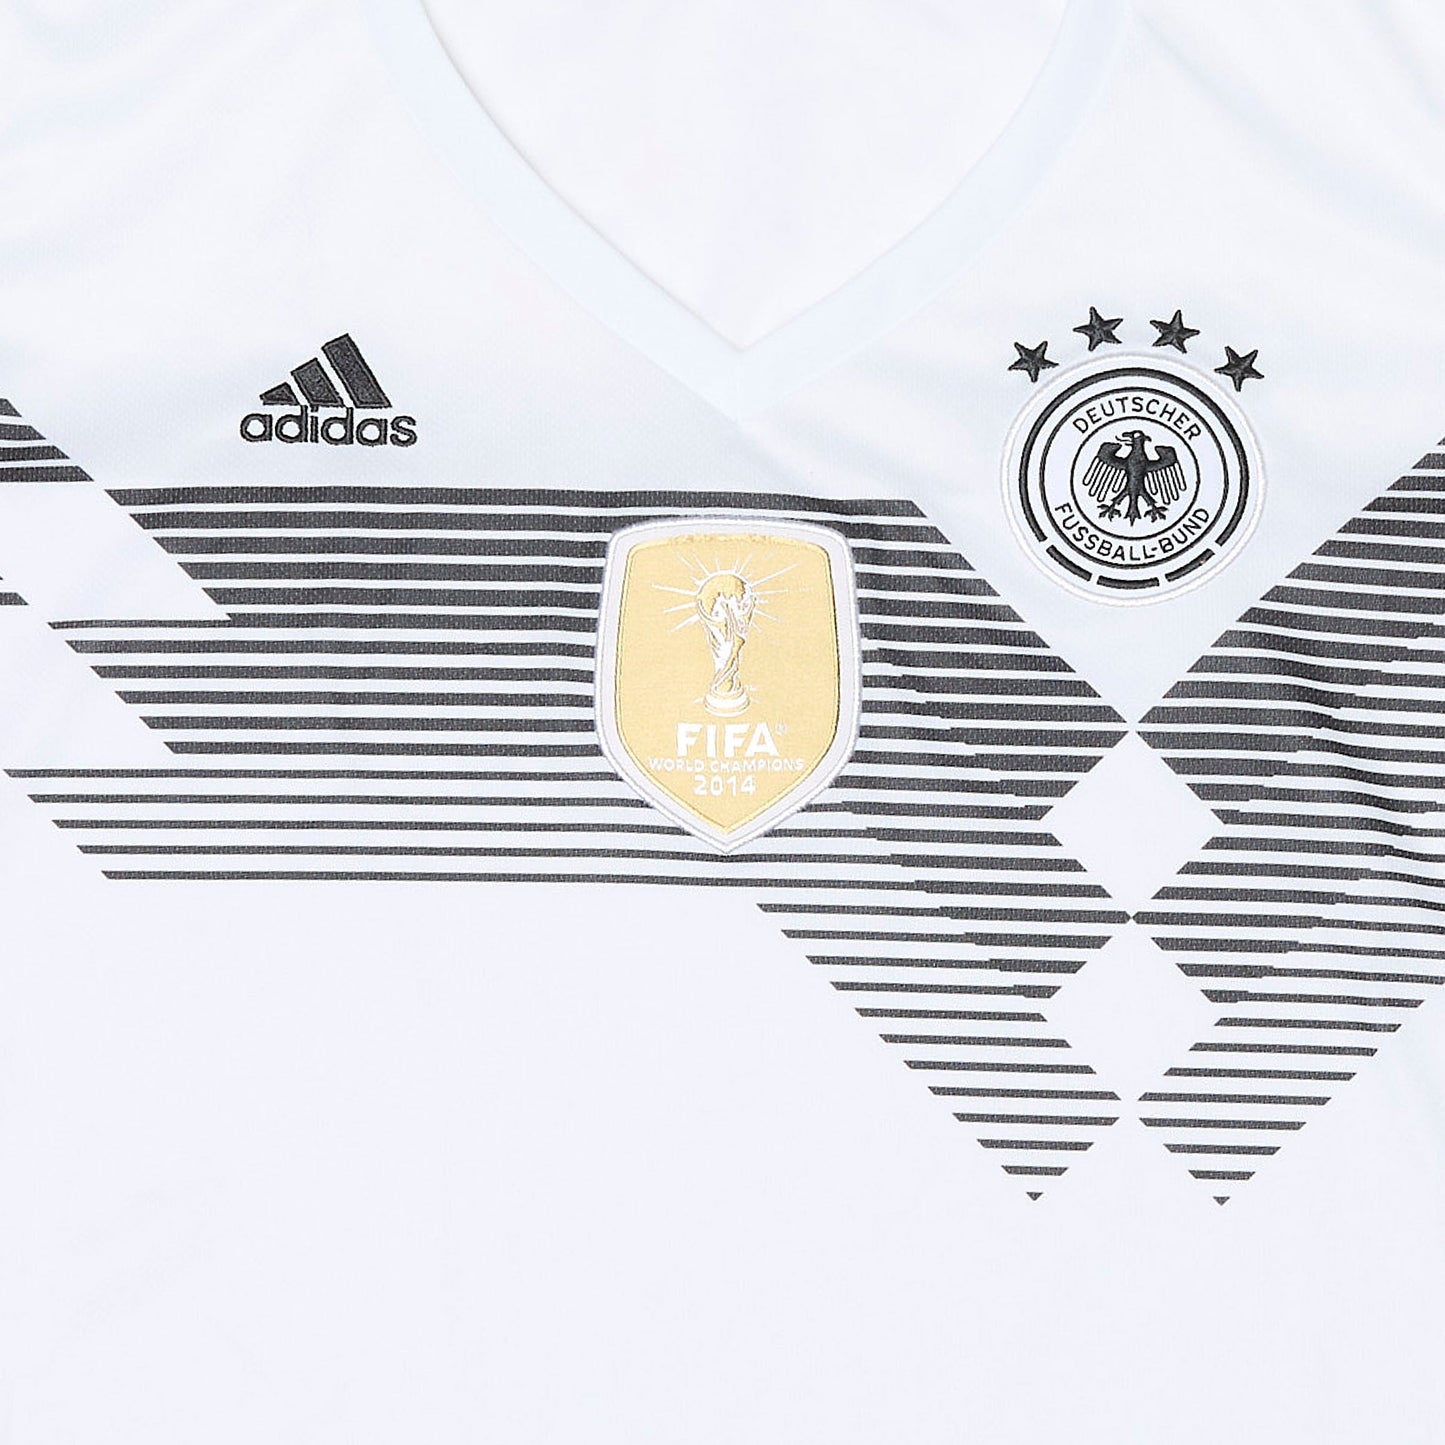 Germany Women's Football Shirt - L